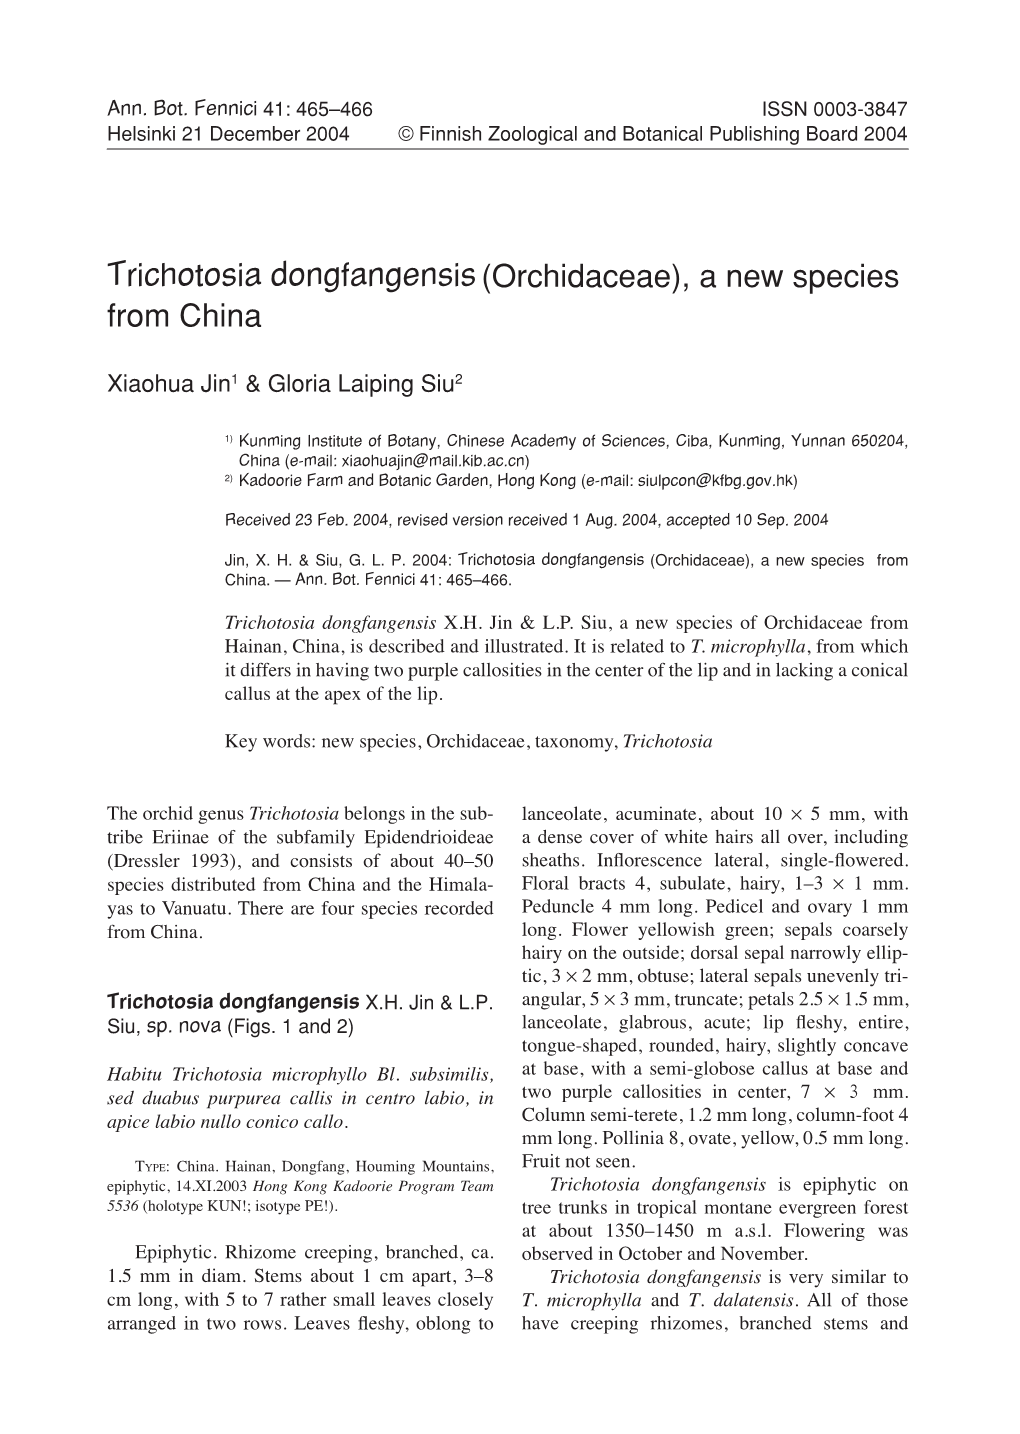 Trichotosia Dongfangensis(Orchidaceae)